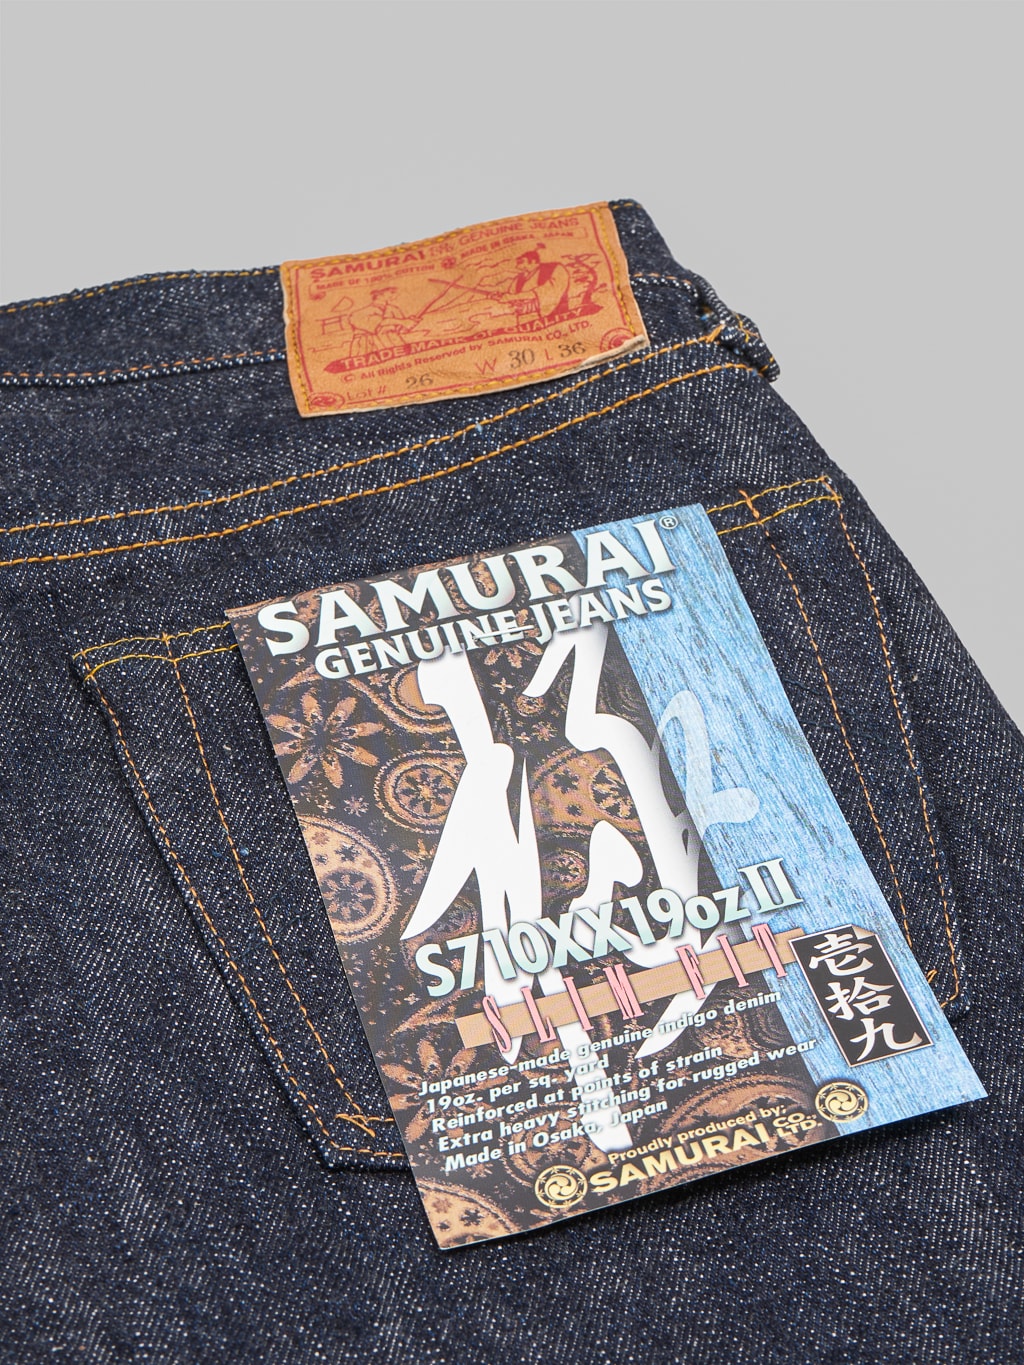 samurai jeans S710XX 19oz slim straight jeans pocket flasher